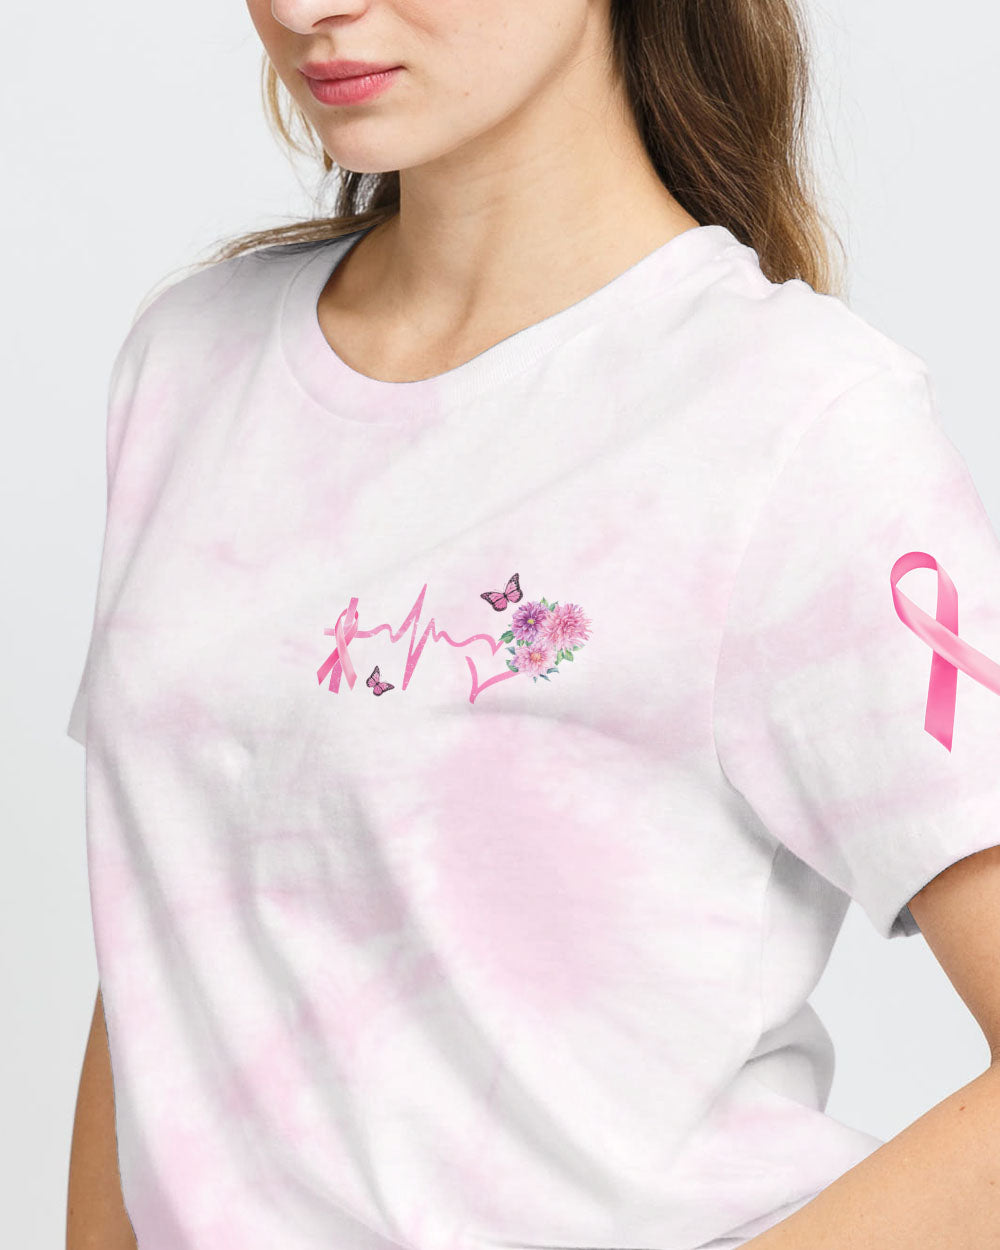 Butterfly Flower Cross Ribbon Women's Breast Cancer Awareness Tshirt